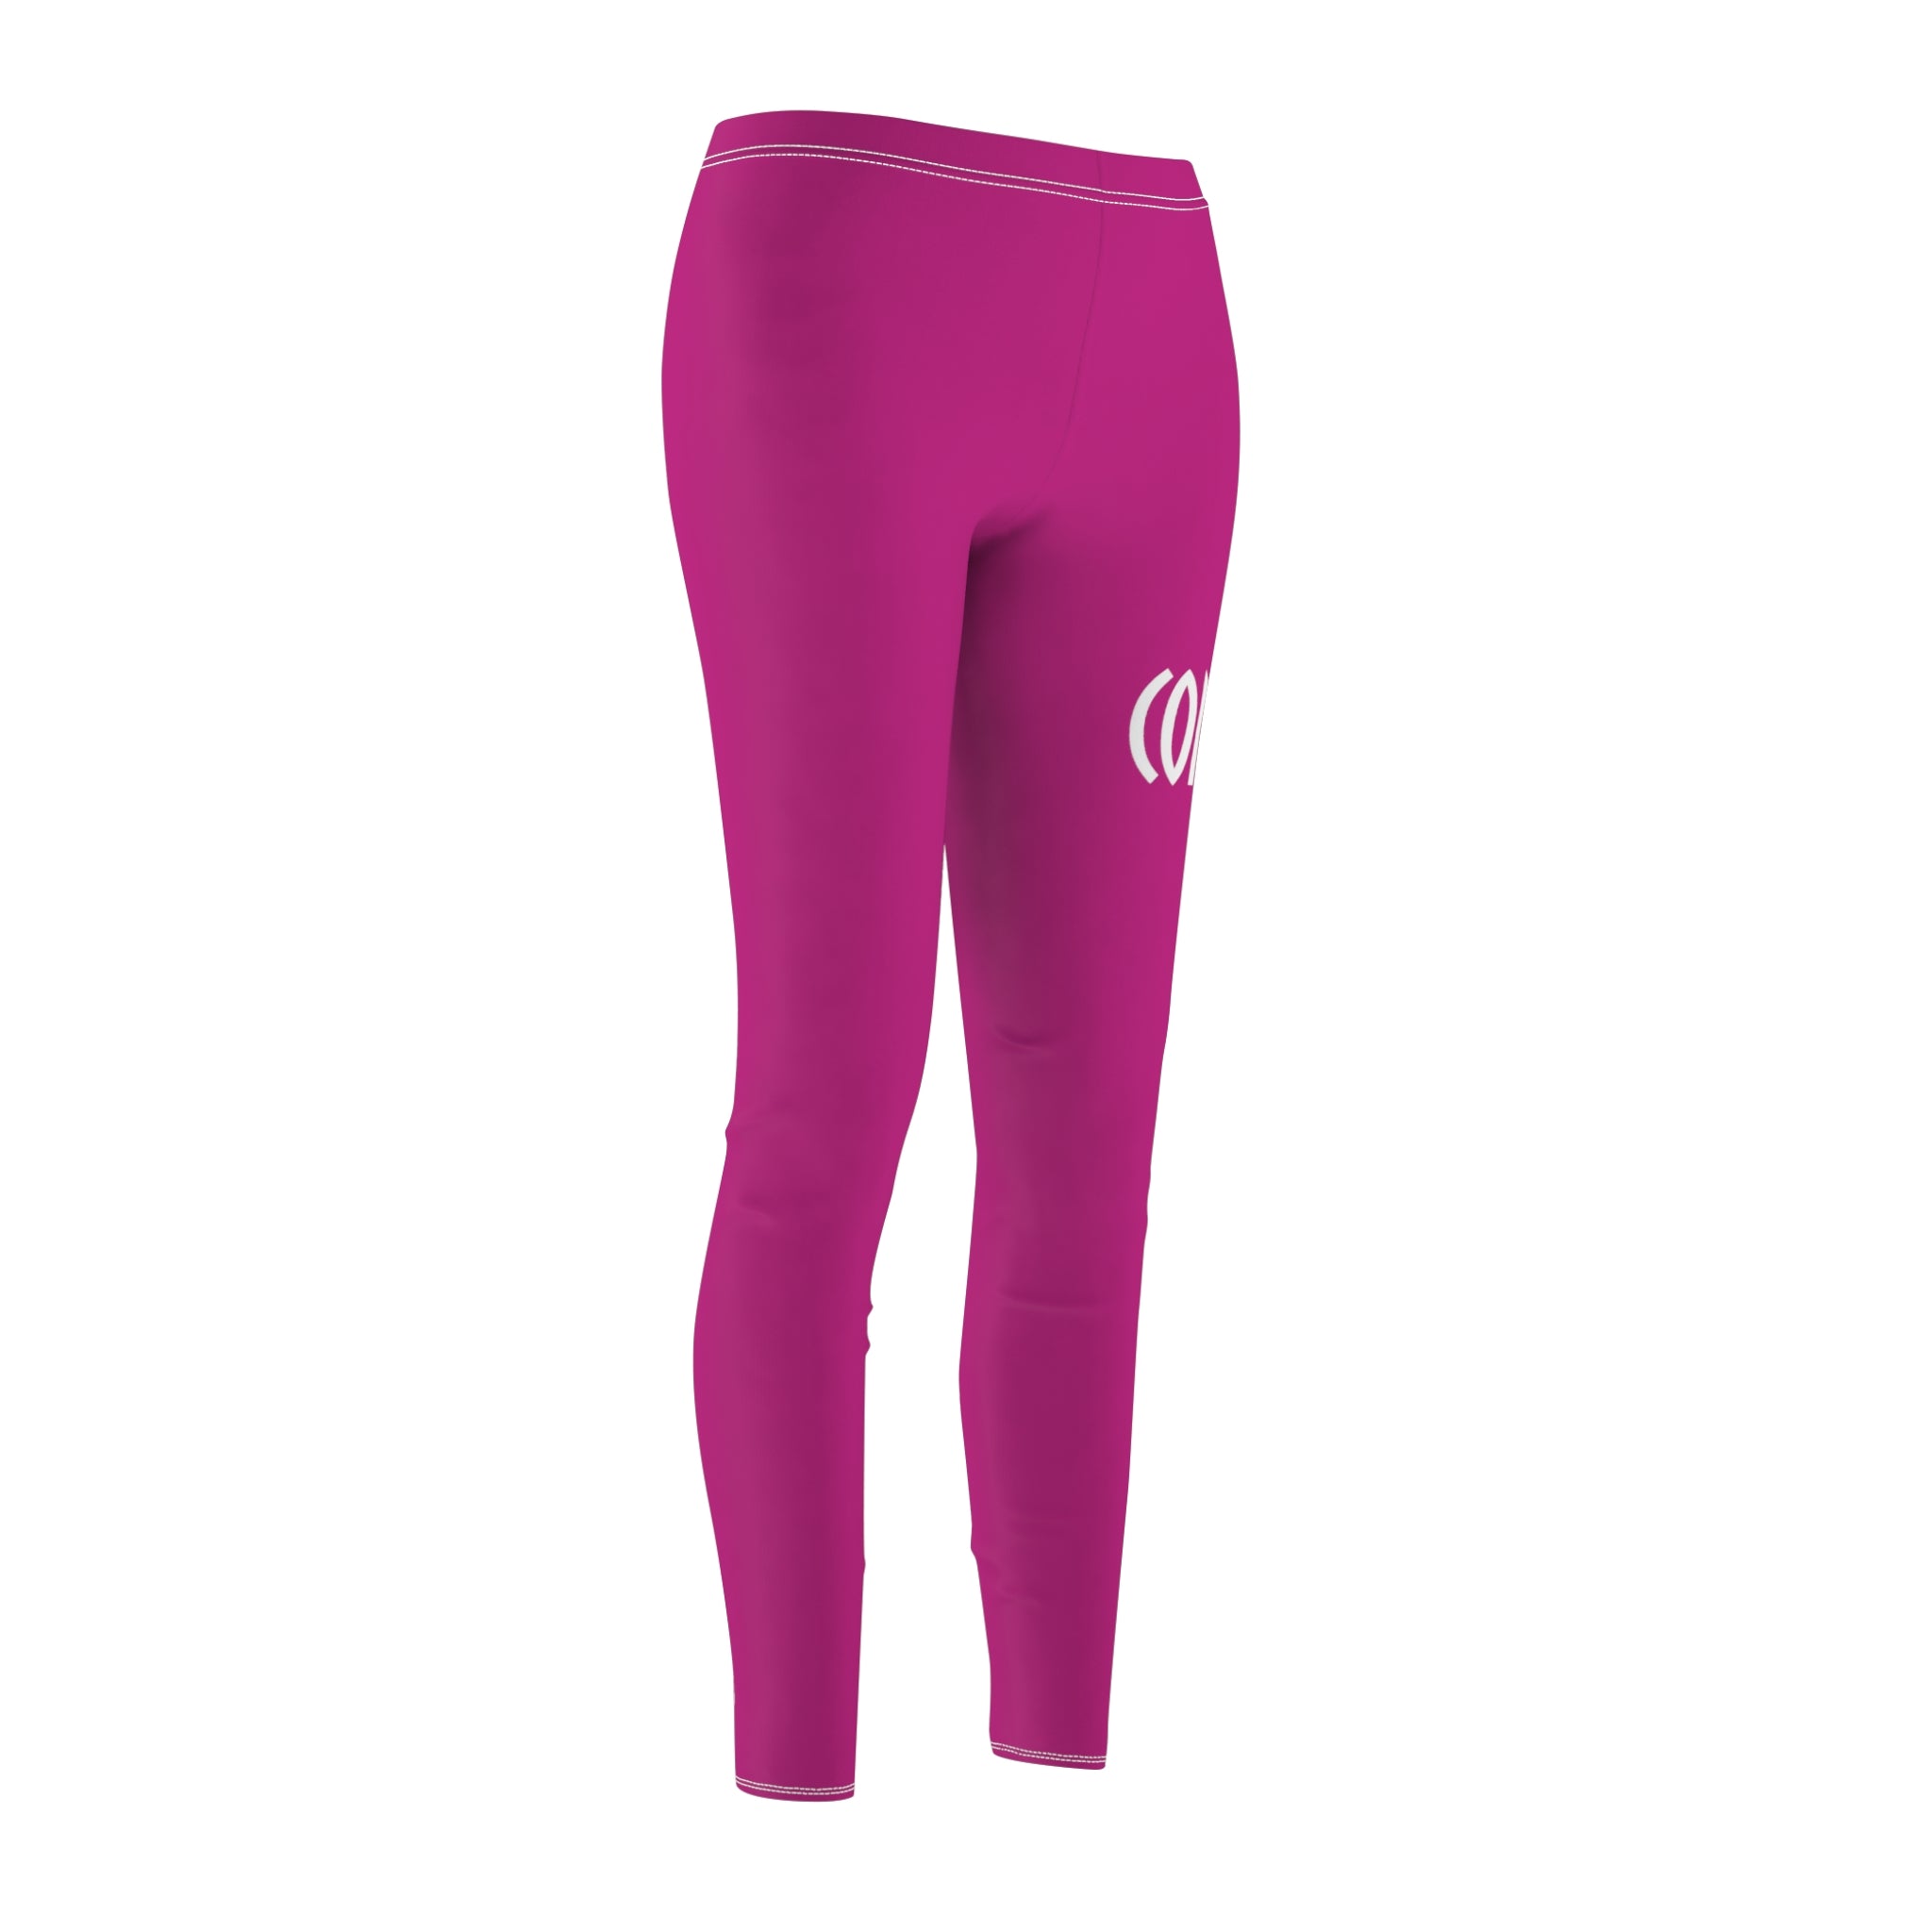 CombinedMinds Women's Cut & Sew Casual Leggings-Pink/White Logo